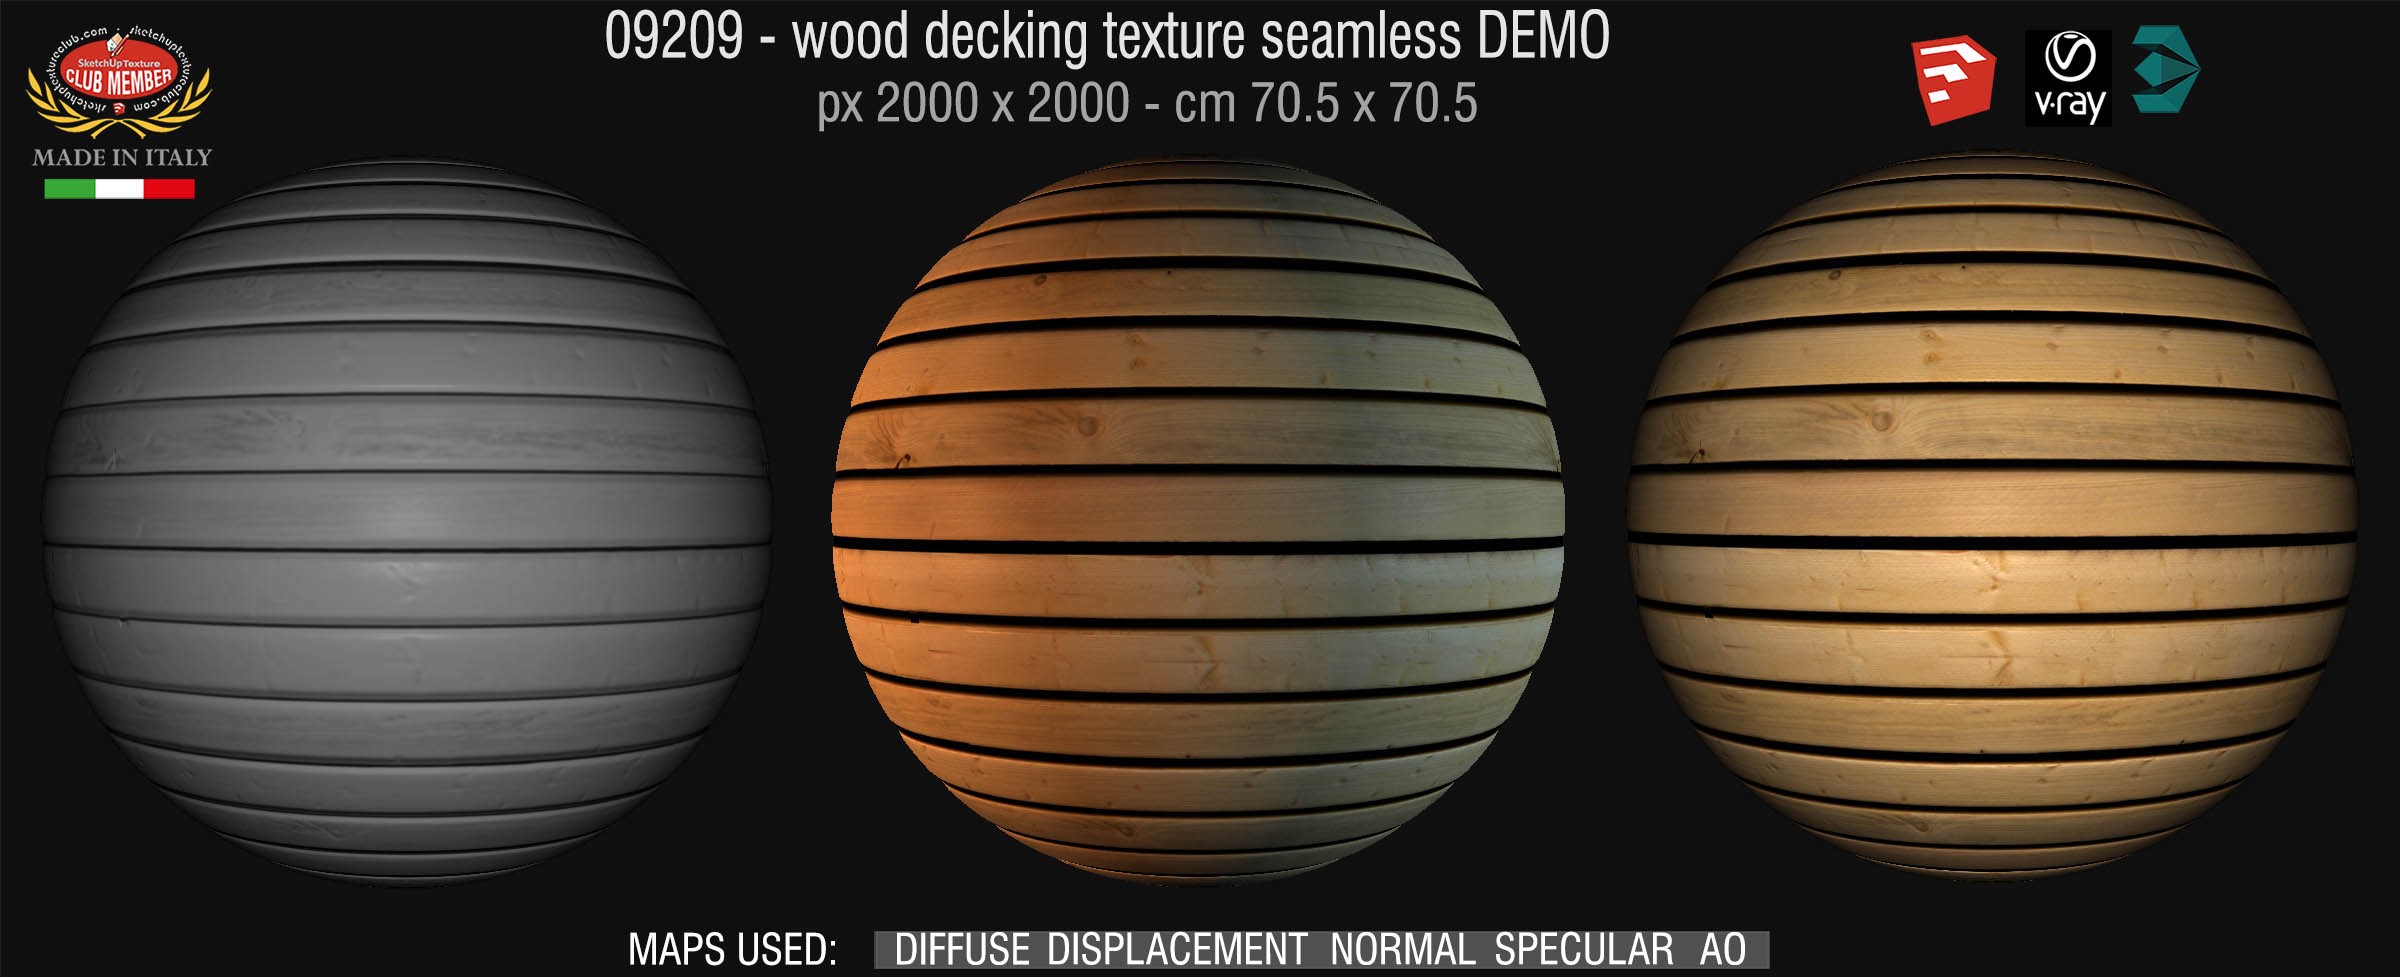 09209 HR Wood decking texture seamless + maps DEMO